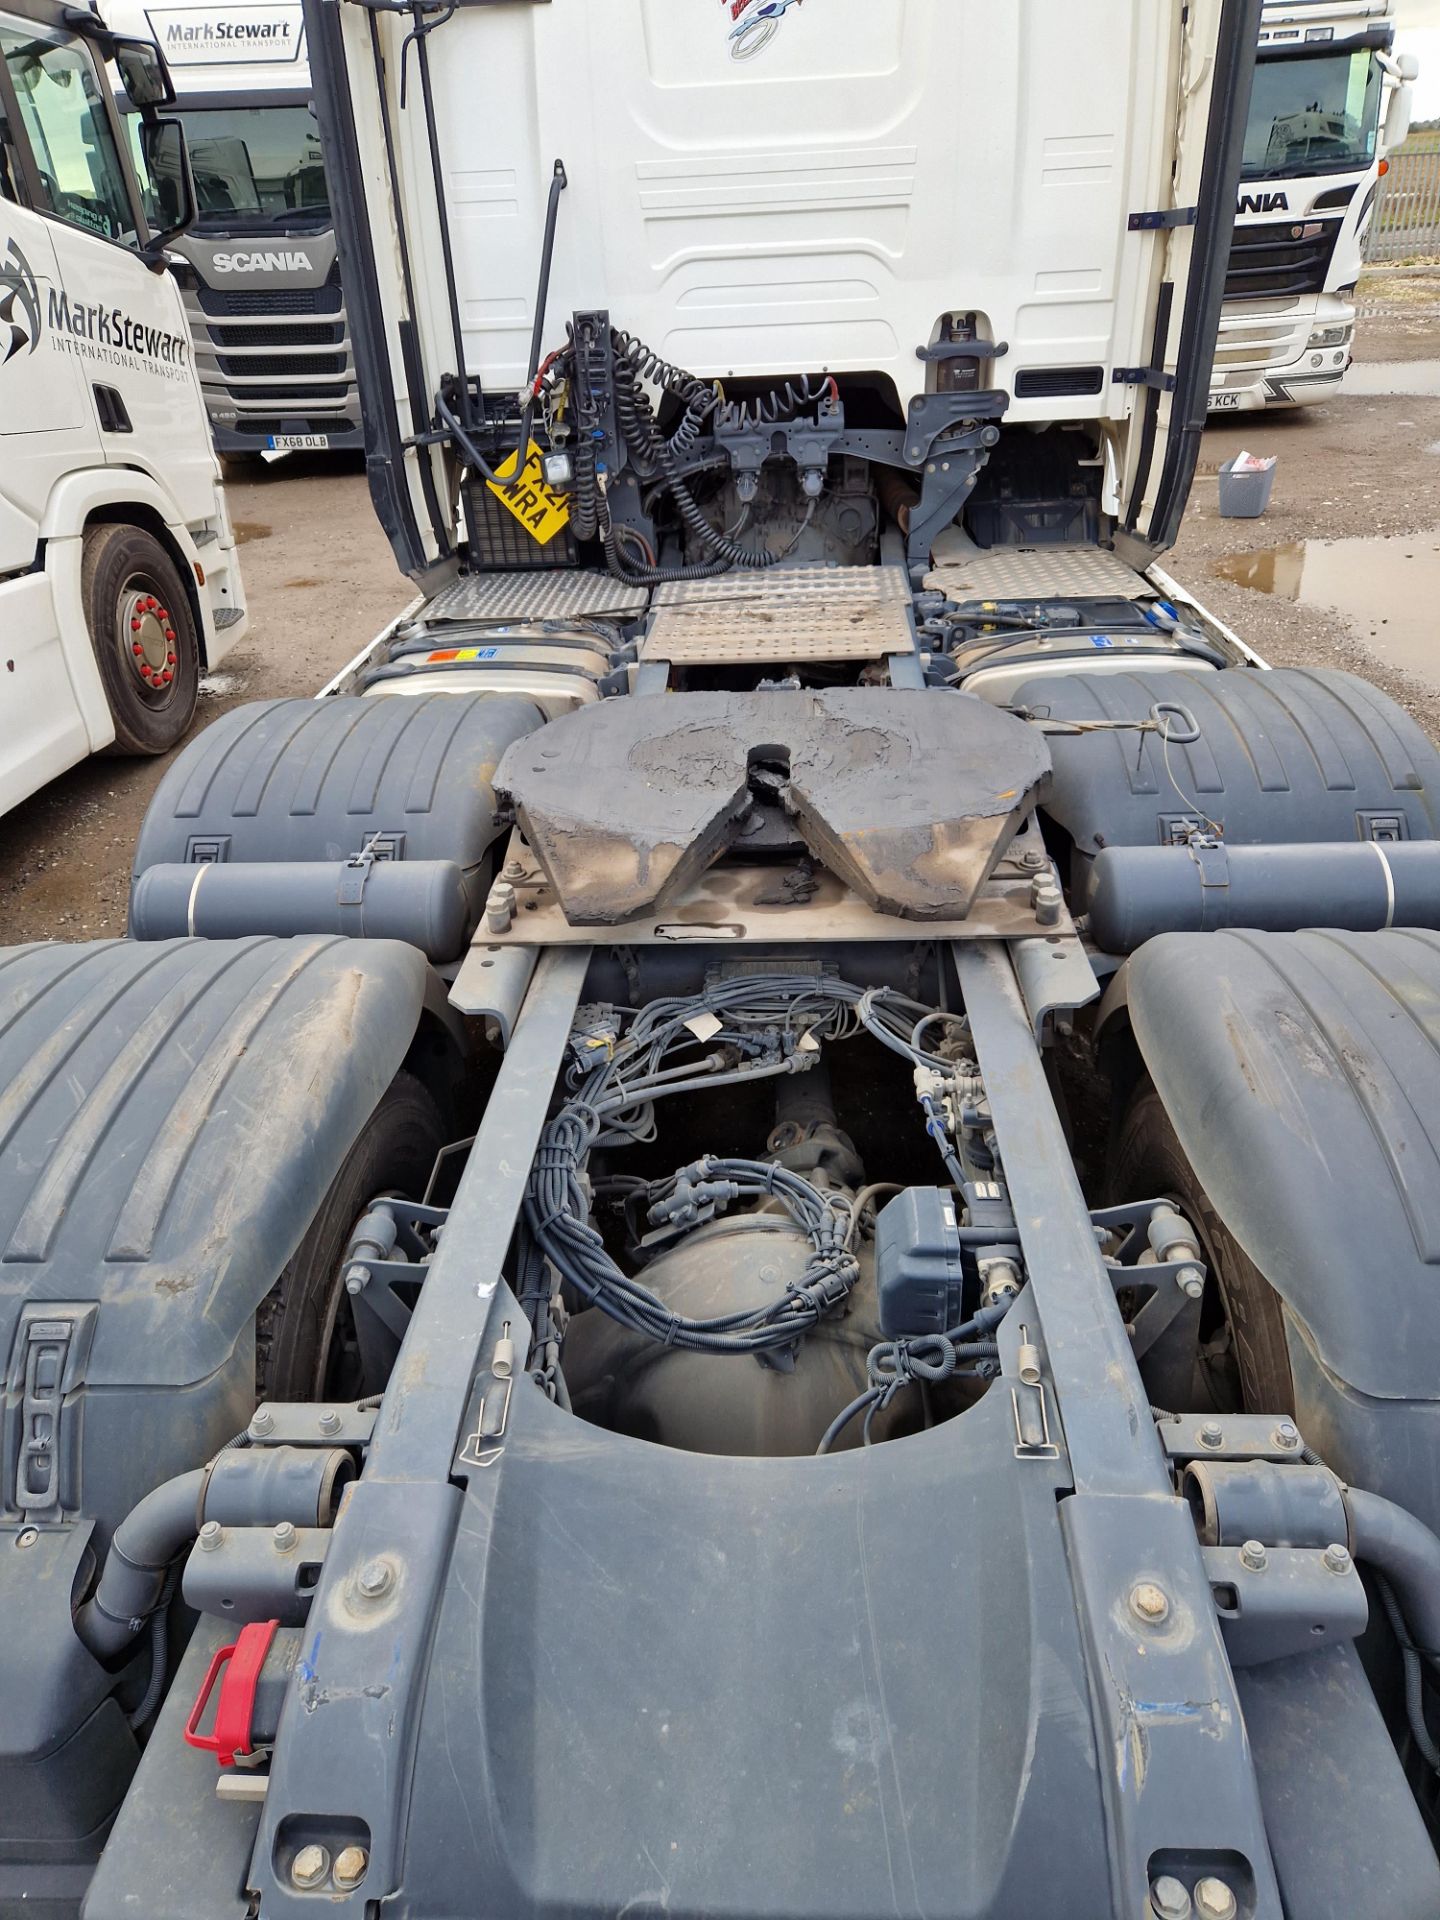 Scania R450 Next Generation 44T 6x2 Tractor Unit with Fridge Freezer, Registration No. FX21 WRA, - Image 6 of 10